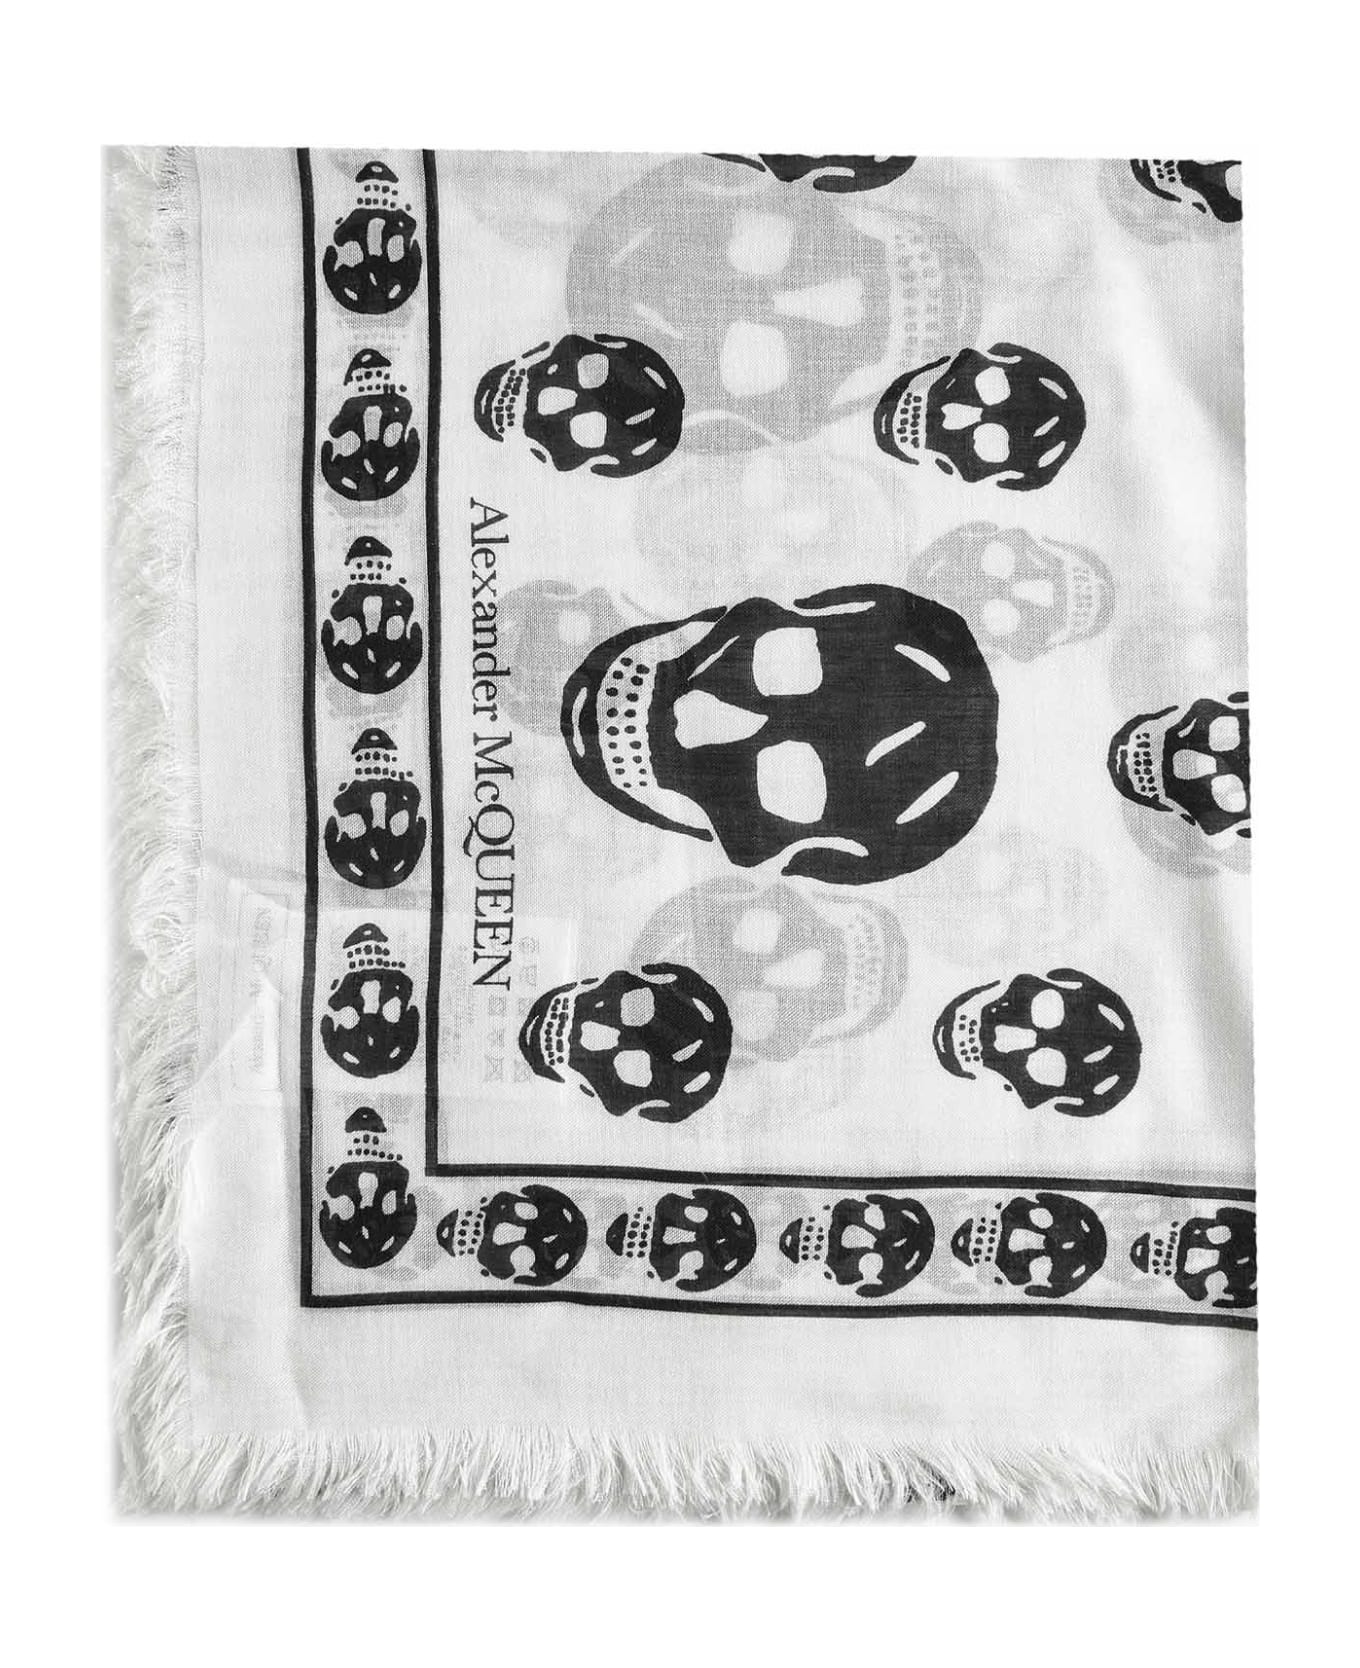 Alexander McQueen Skull Print Scarf - Ivory black スカーフ